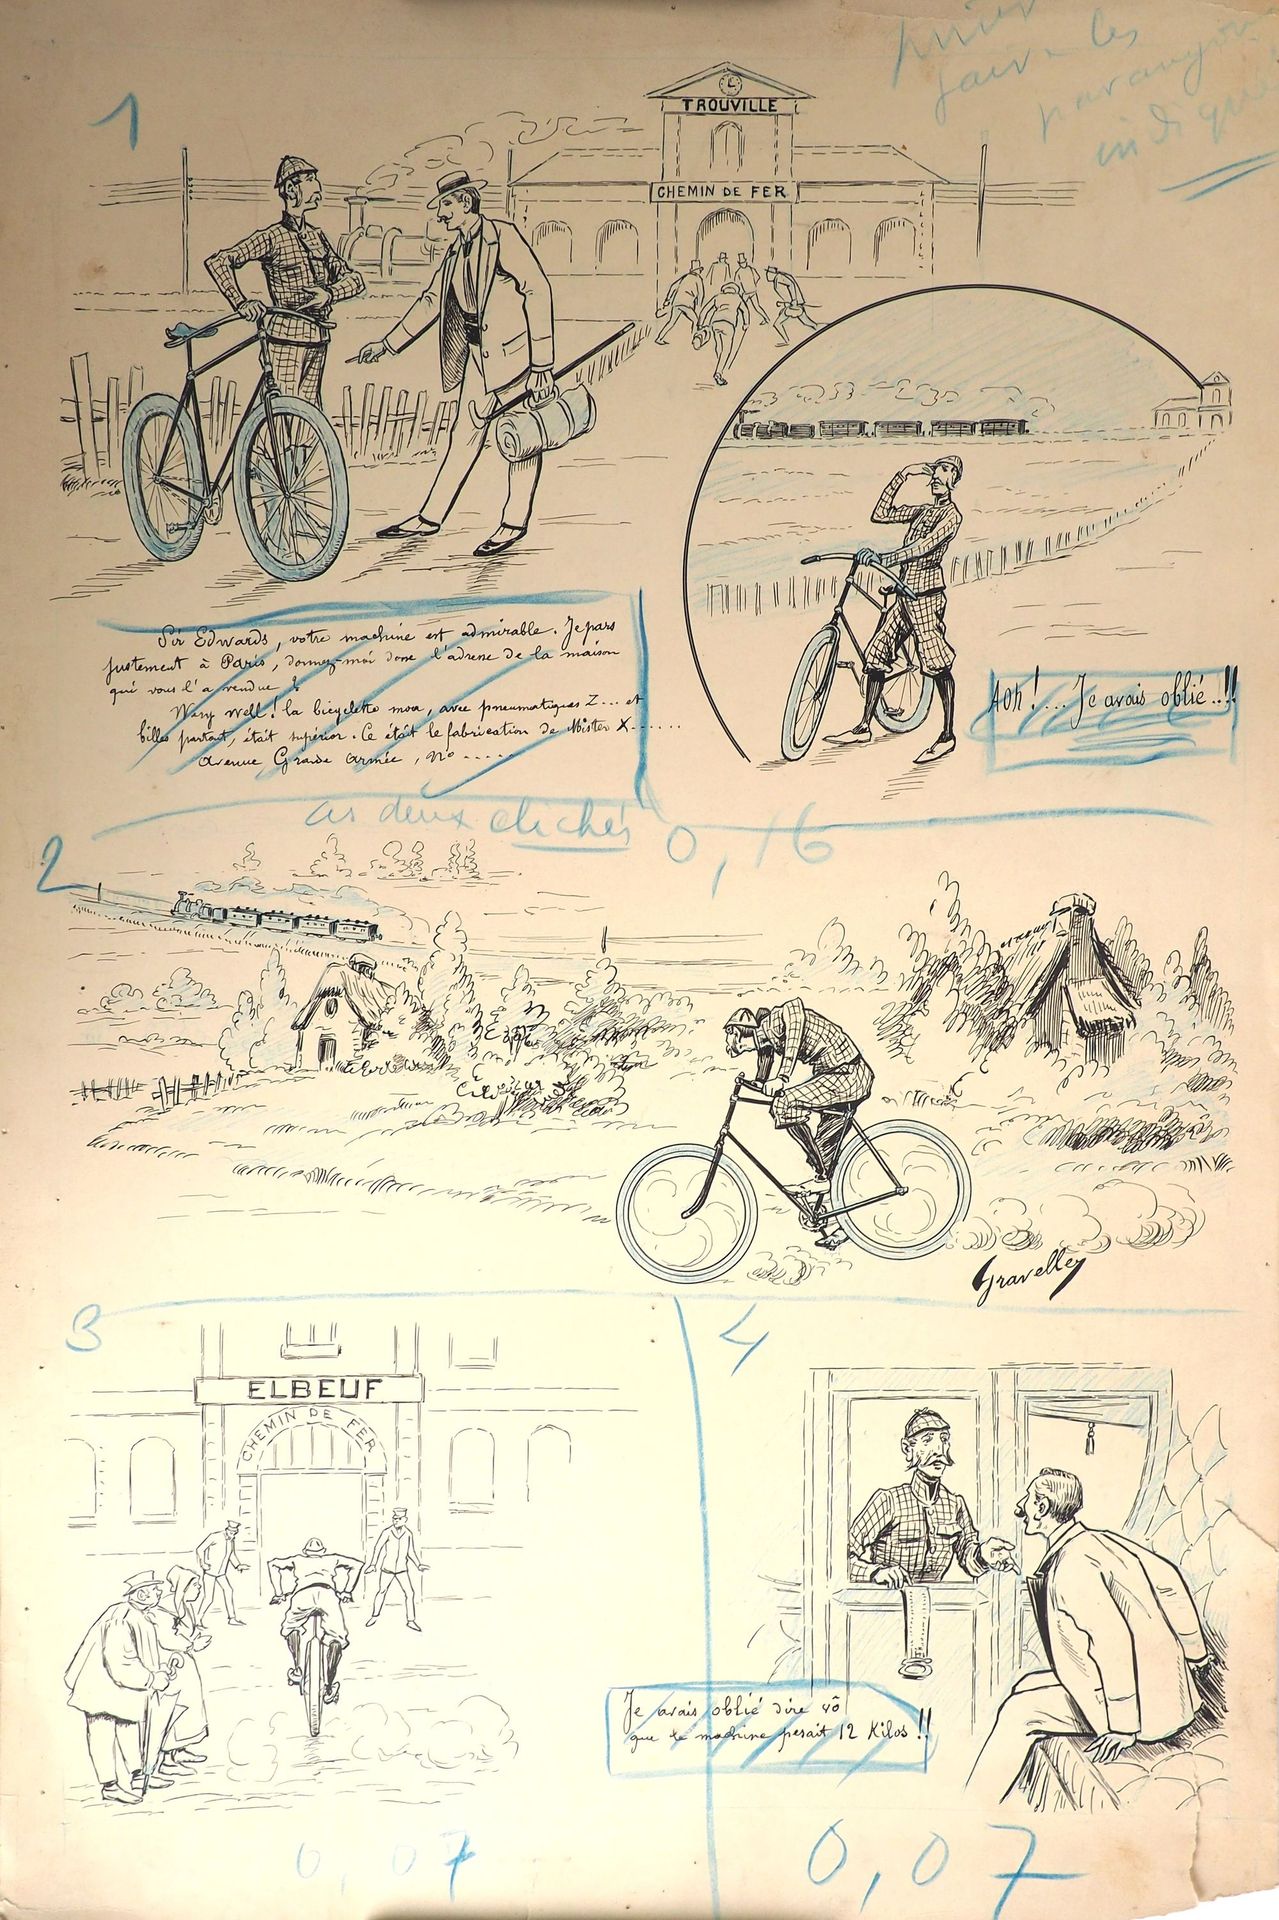 Null 骑自行车/Trouville/车站/火车。格拉维利用印度墨水绘制的极好的原始印刷图。1895年左右，他在一块板子上画了五张草图，因此非常生动，讲述了一&hellip;